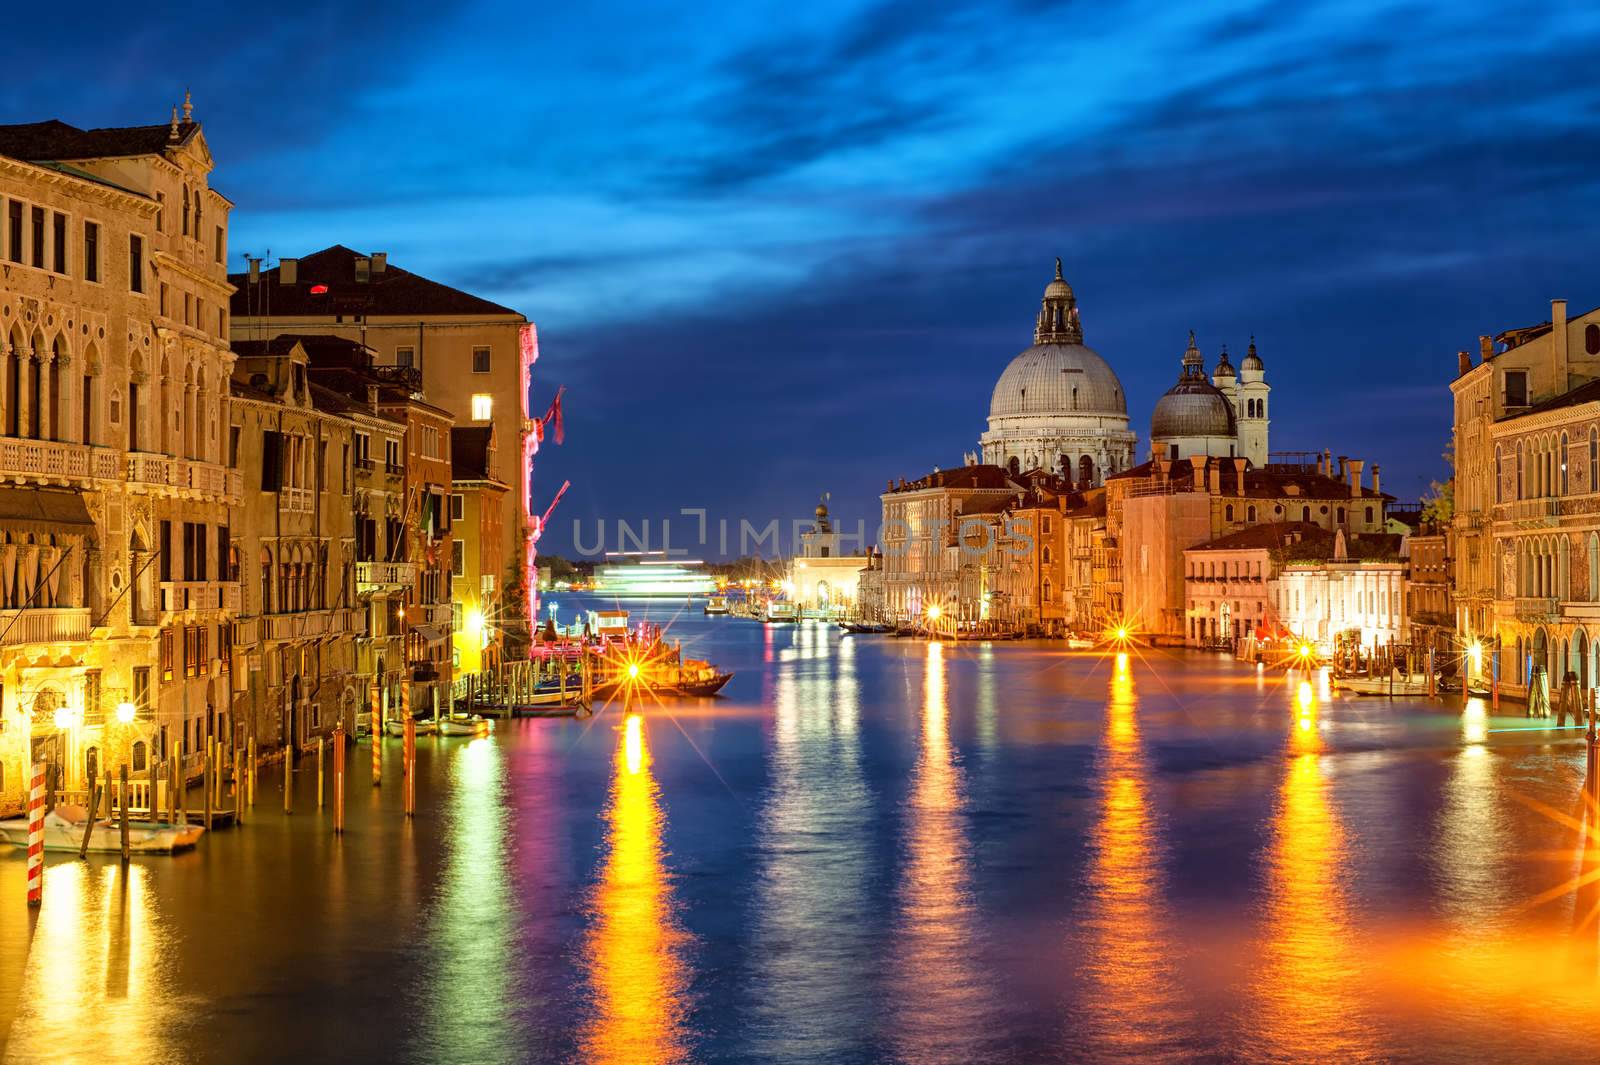 The Grand Canal and Santa Maria della Salute basilica, Venice, I by GlobePhotos